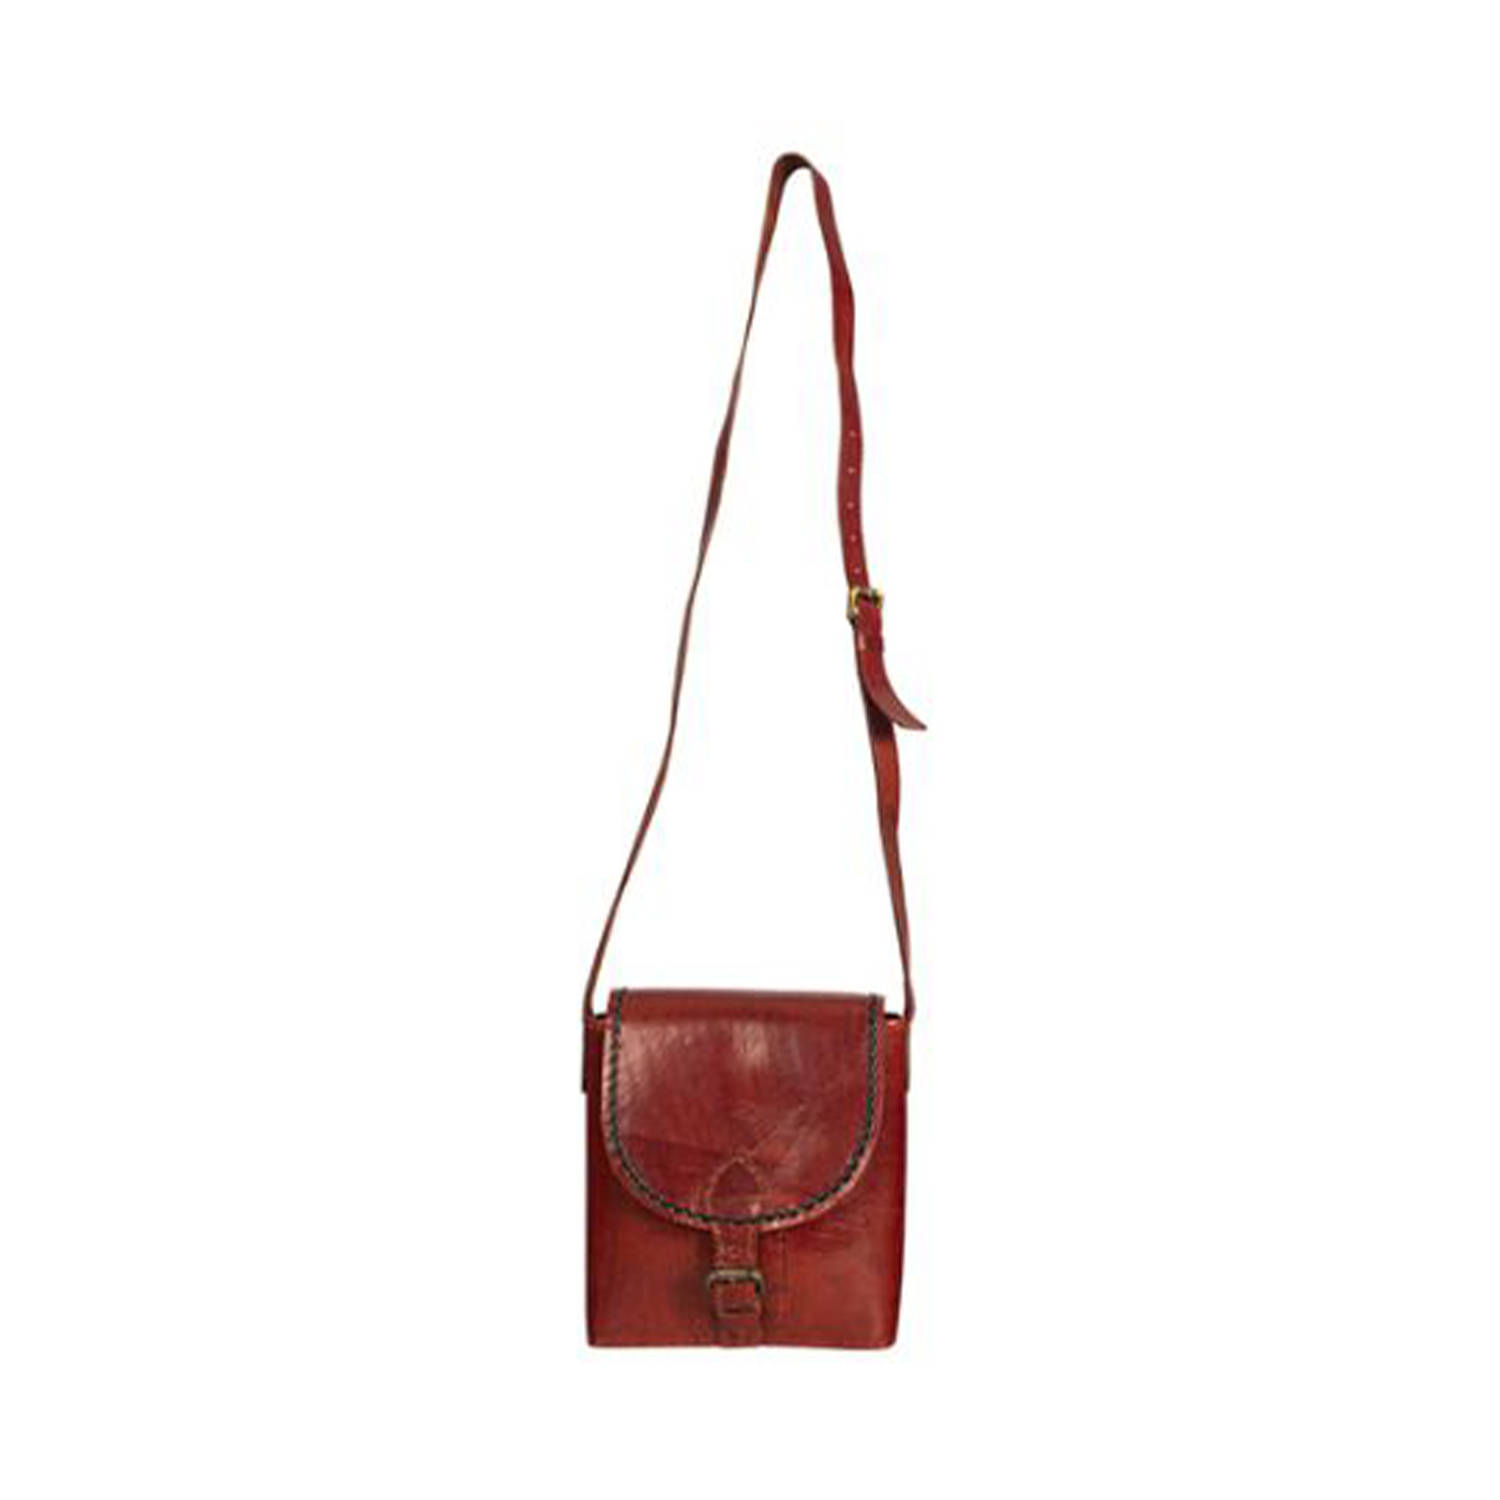 Woven Leather Handbag, Brown Designer Bag, Leather Handbag for Women, Large  Woven Handbag, Handmade Elbow Bag, Leather Purse, Woven Tote Bag - Etsy |  Woven leather bag, Leather handbags, Leather